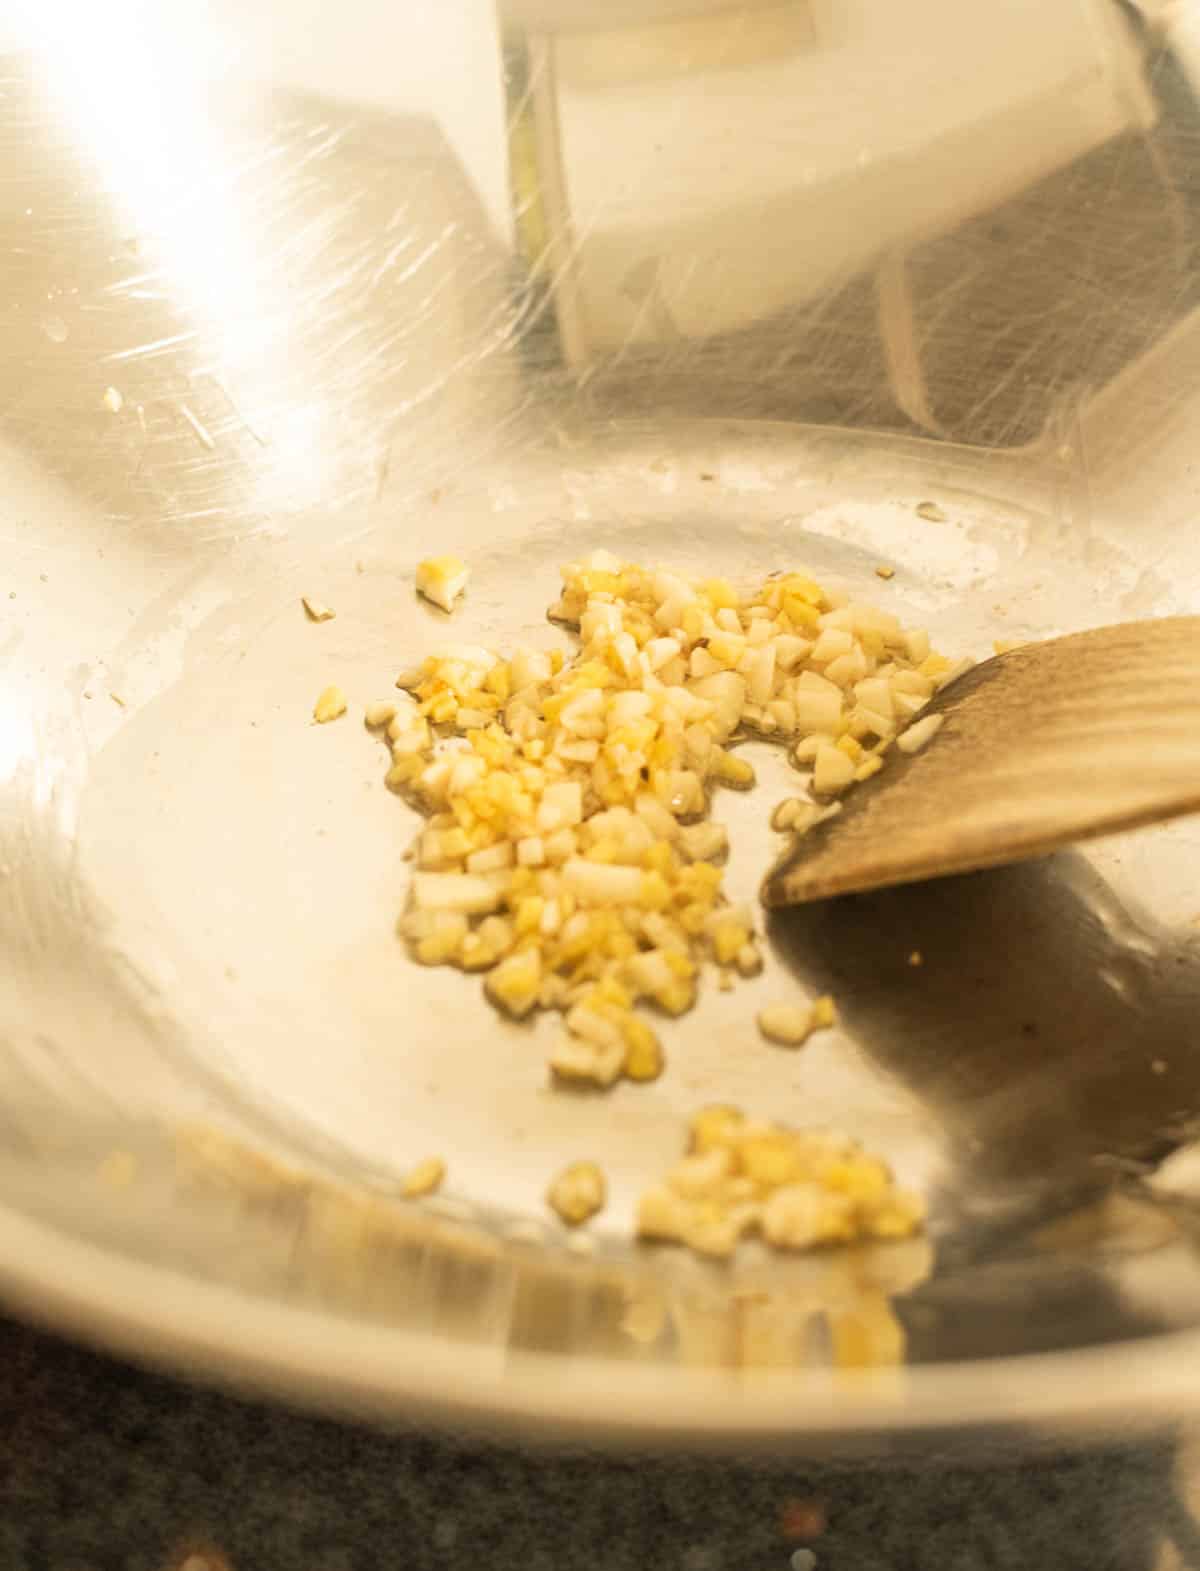 Garlic being stir-fried in a wok with a wooden spatula